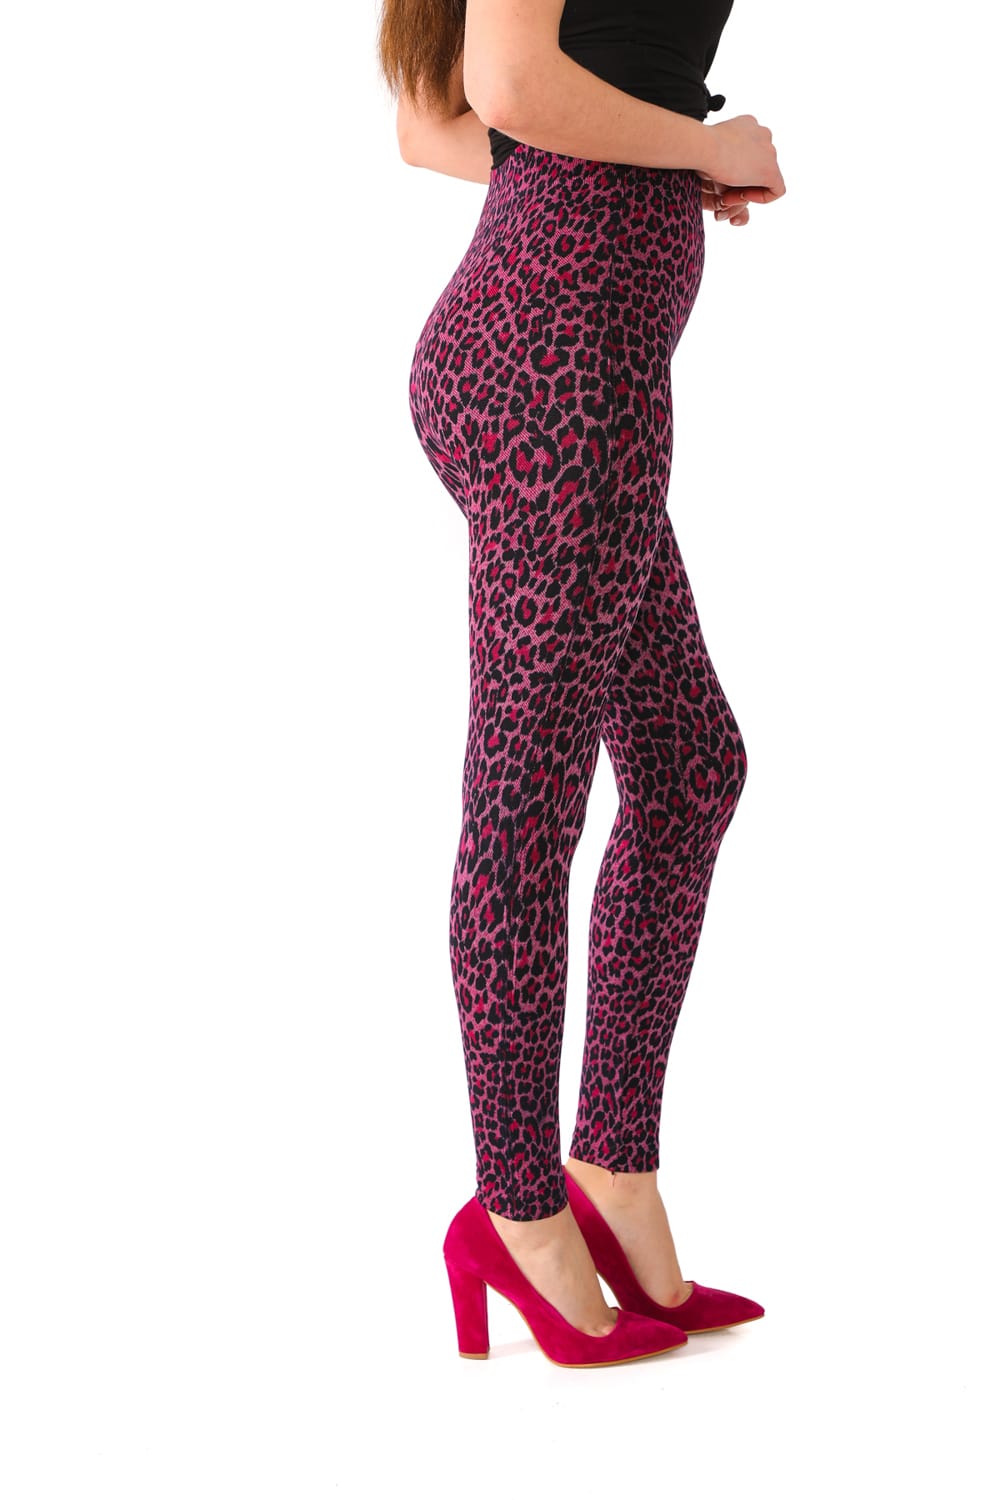 Denim Leggings with Pink Leopard Pattern - 6